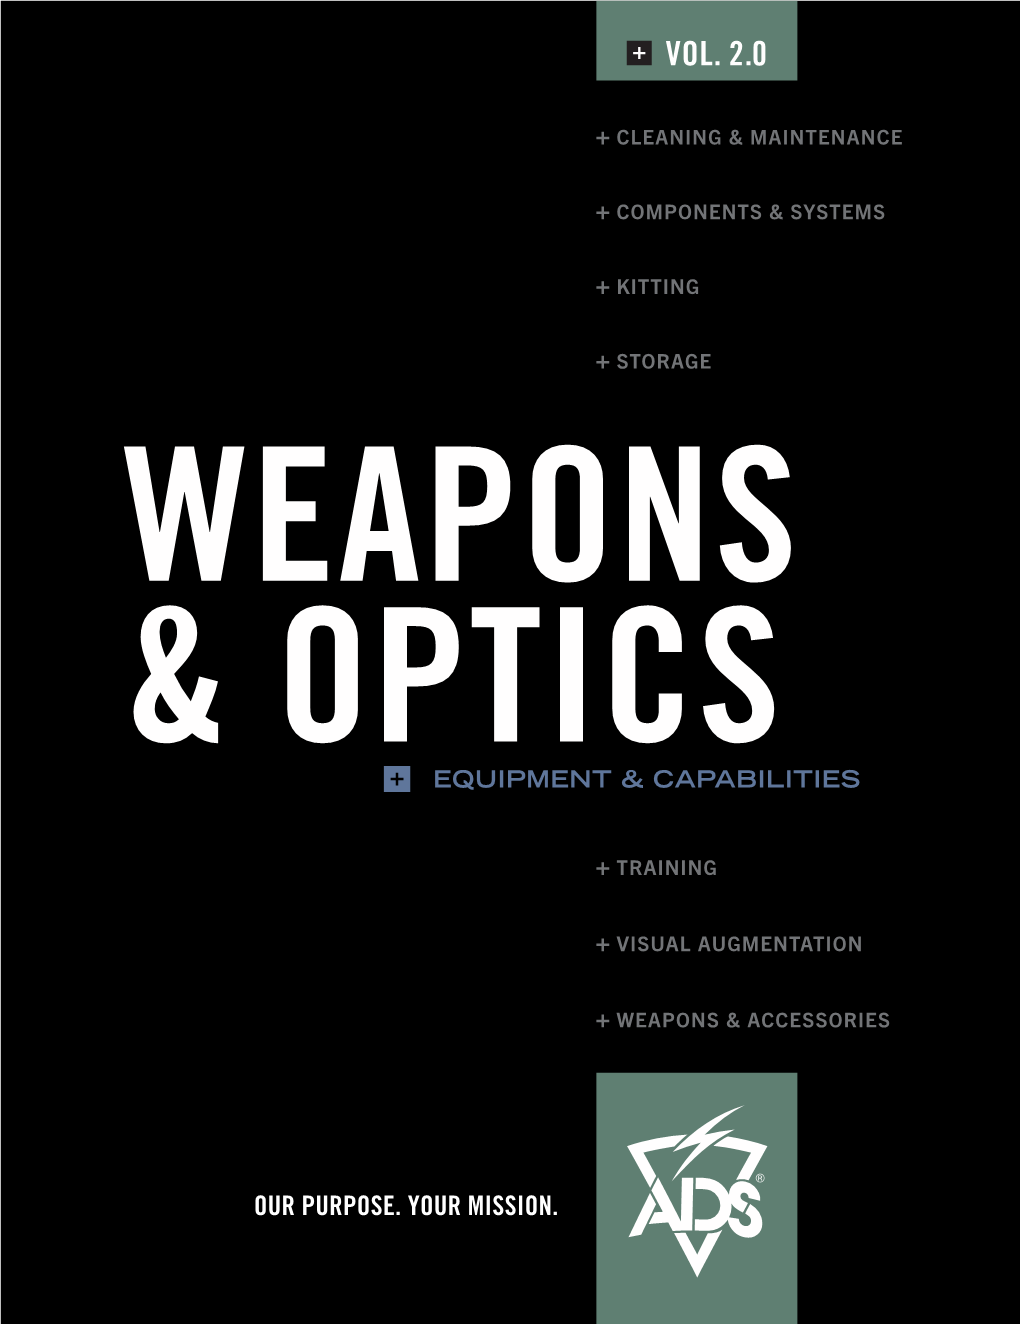 ADS Weapons & Optics Equipment & Capabilities Catalog